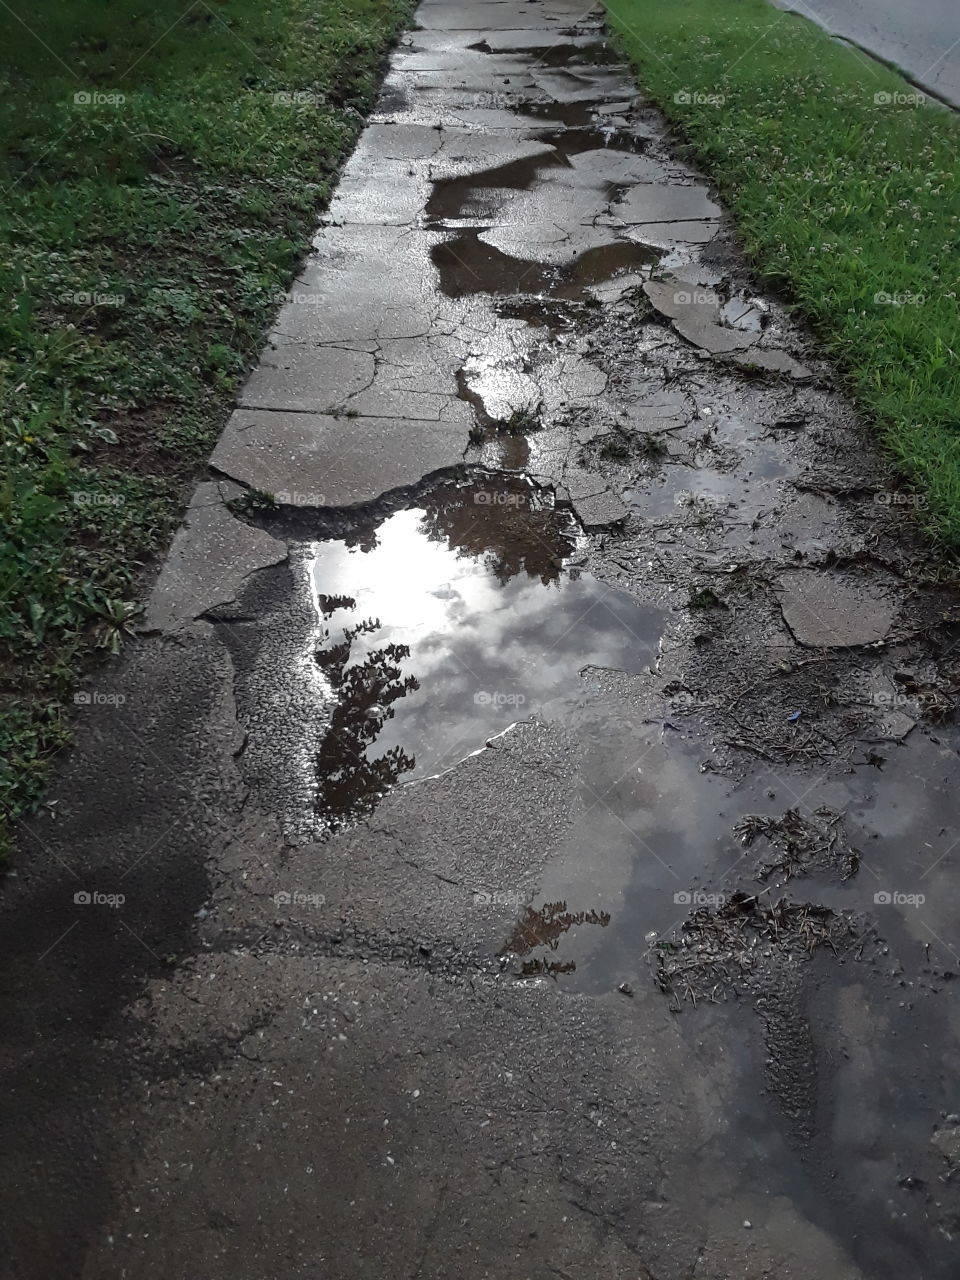 broken sidewalk after rain reflecting the sky